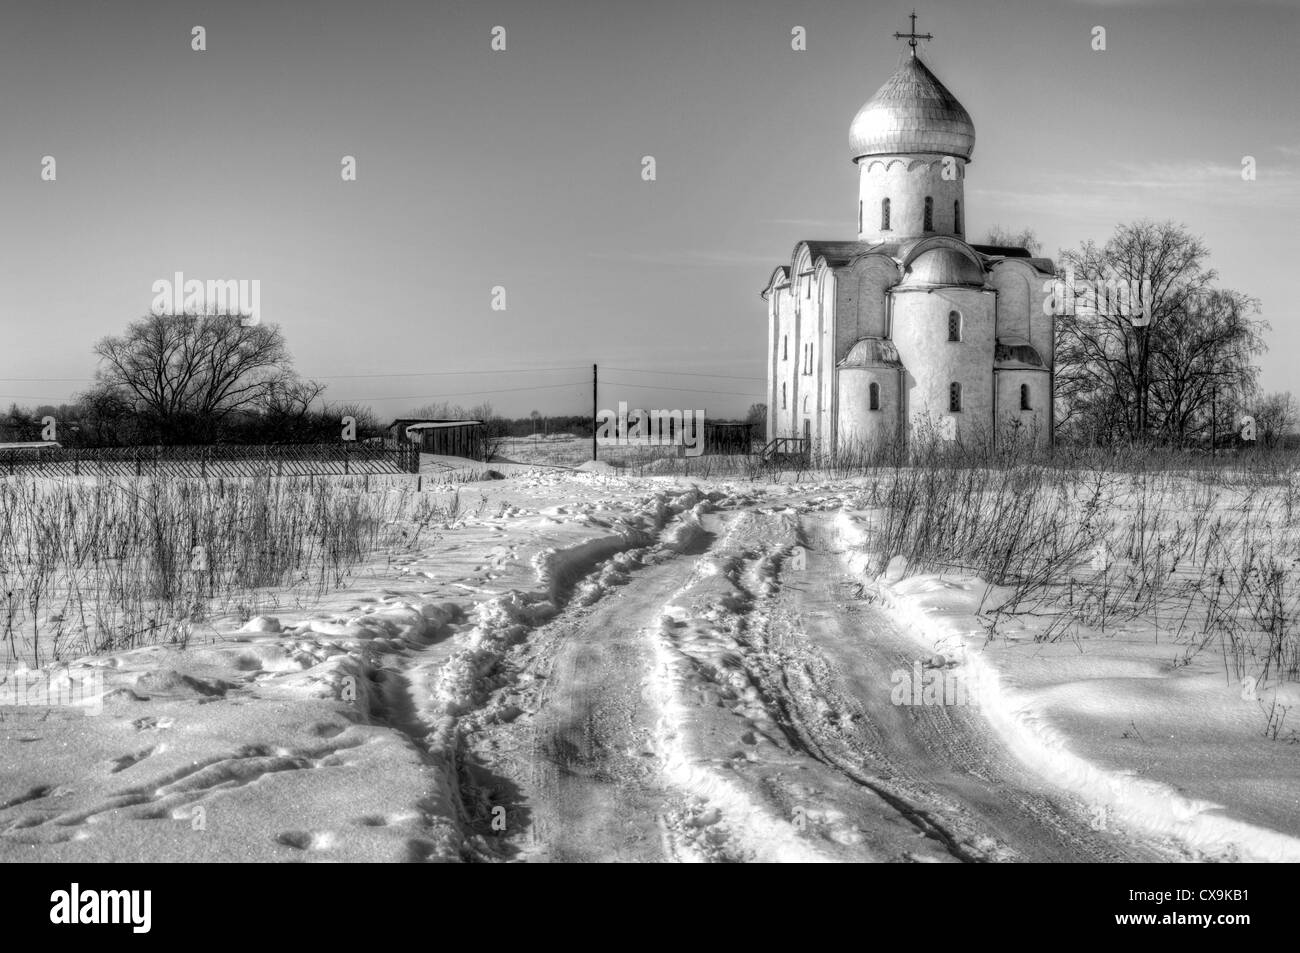 Eglise du Sauveur sur Nereditsa Hill (1198), Veliki Novgorod, Novgorod Region, Russie Banque D'Images